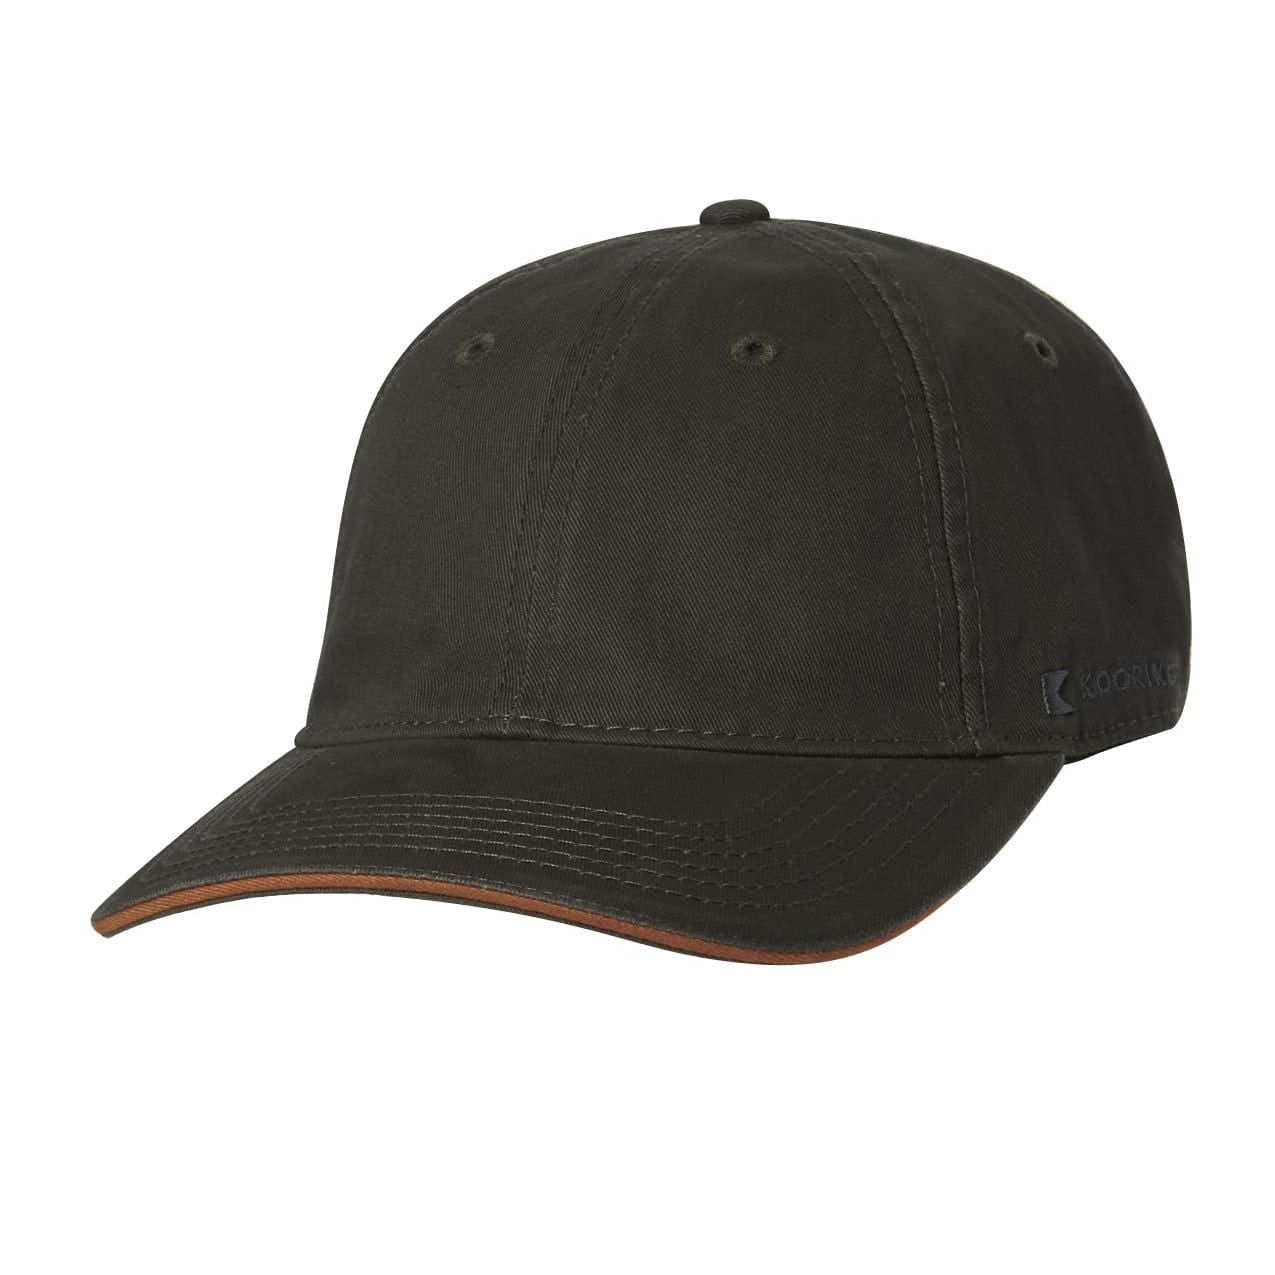 Kooringal Men's Hats Dark Grey Boston Casual Cap